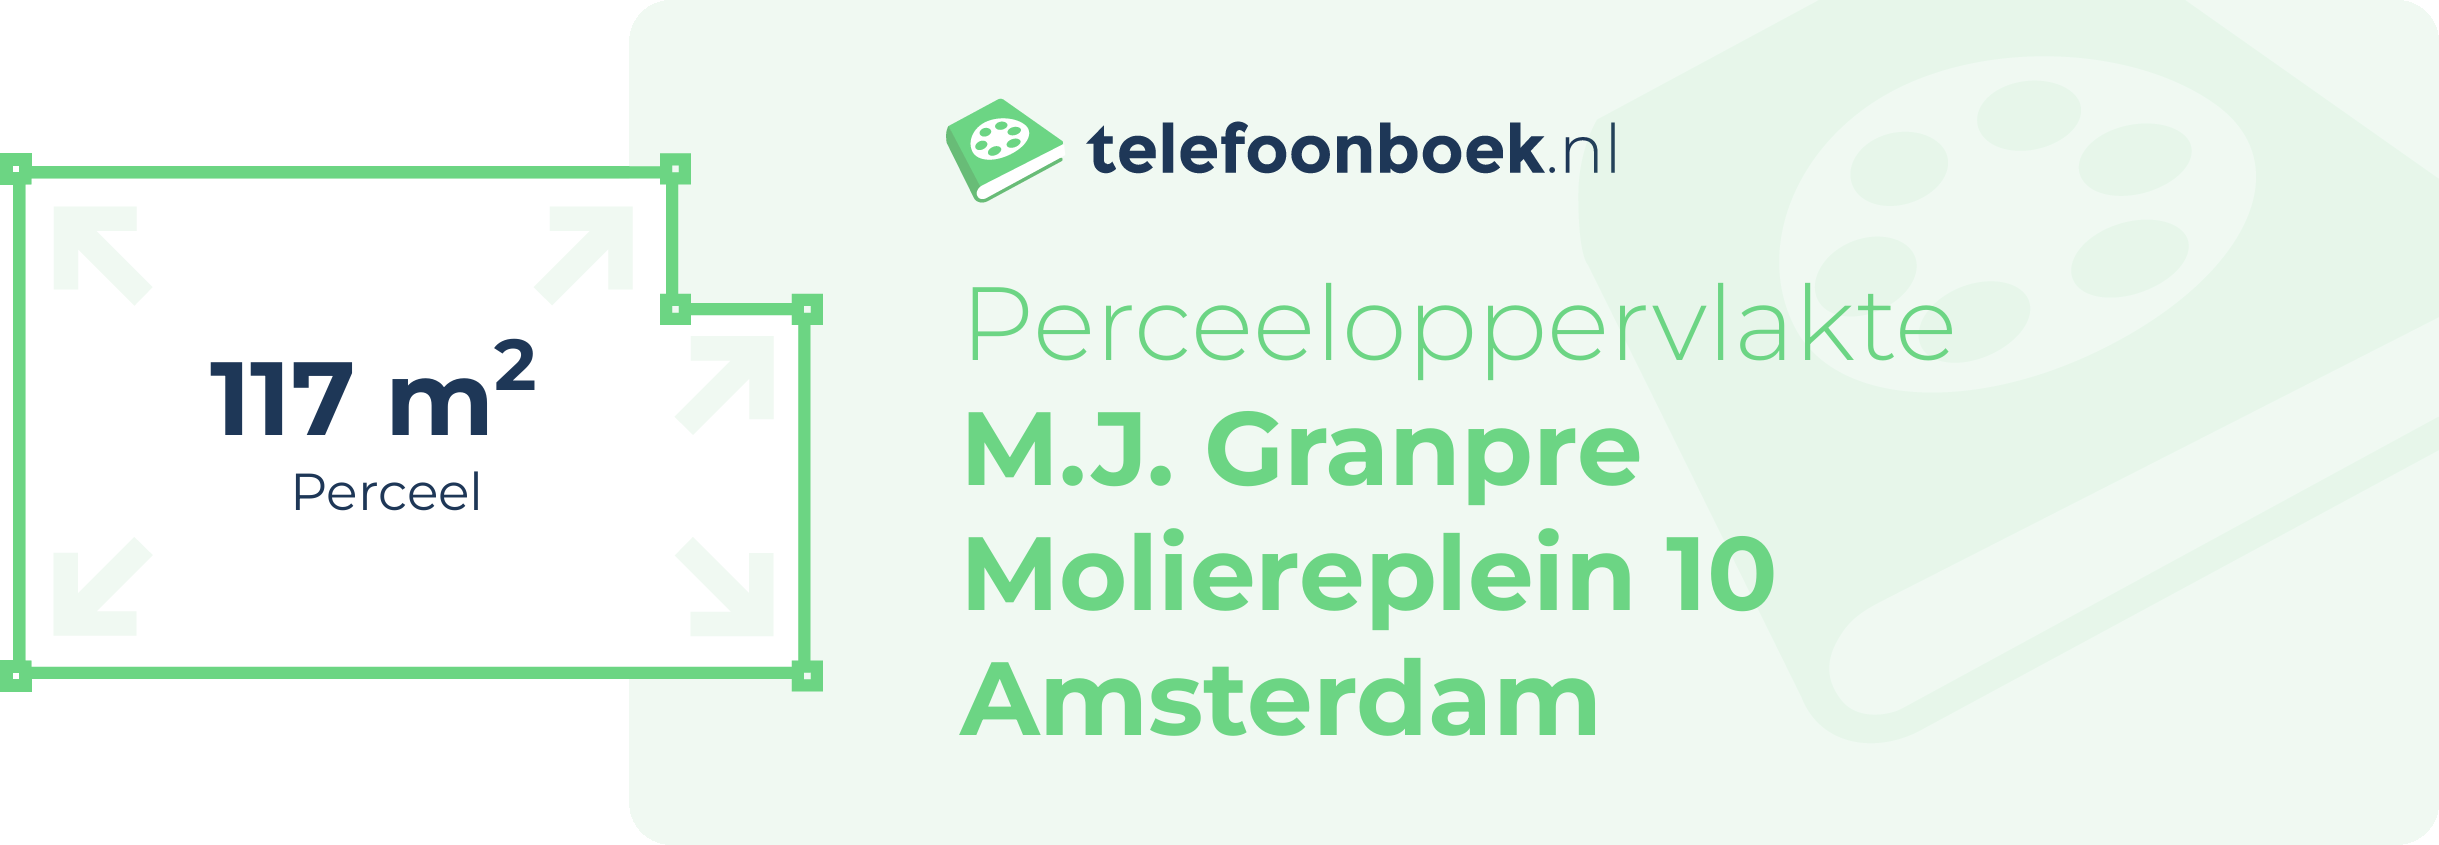 Perceeloppervlakte M.J. Granpre Moliereplein 10 Amsterdam